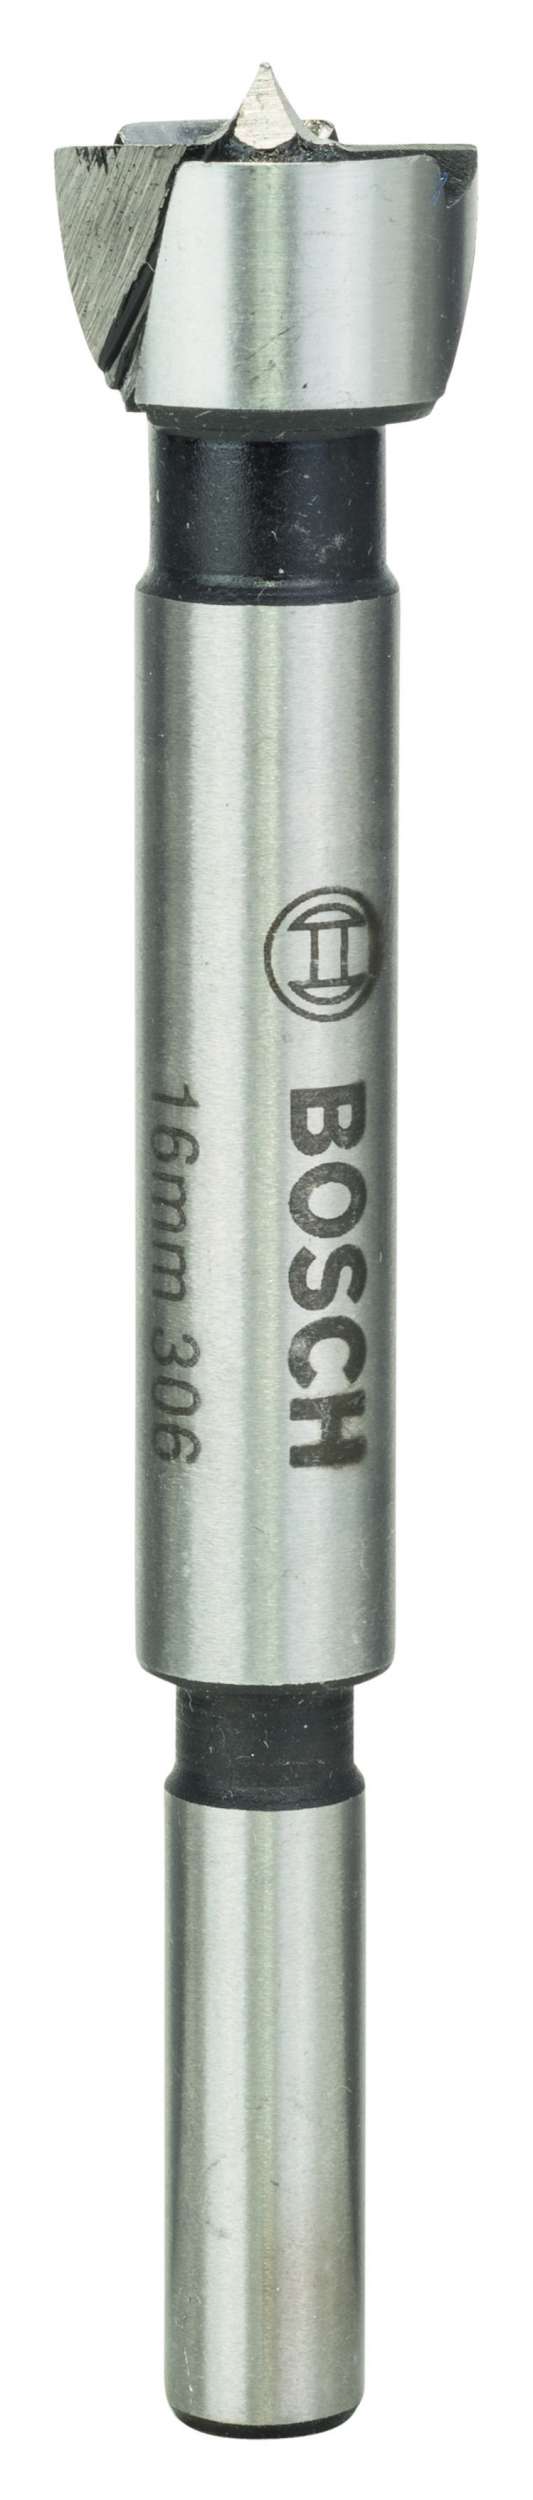 Bosch - Menteşe Açma Ucu 16 mm